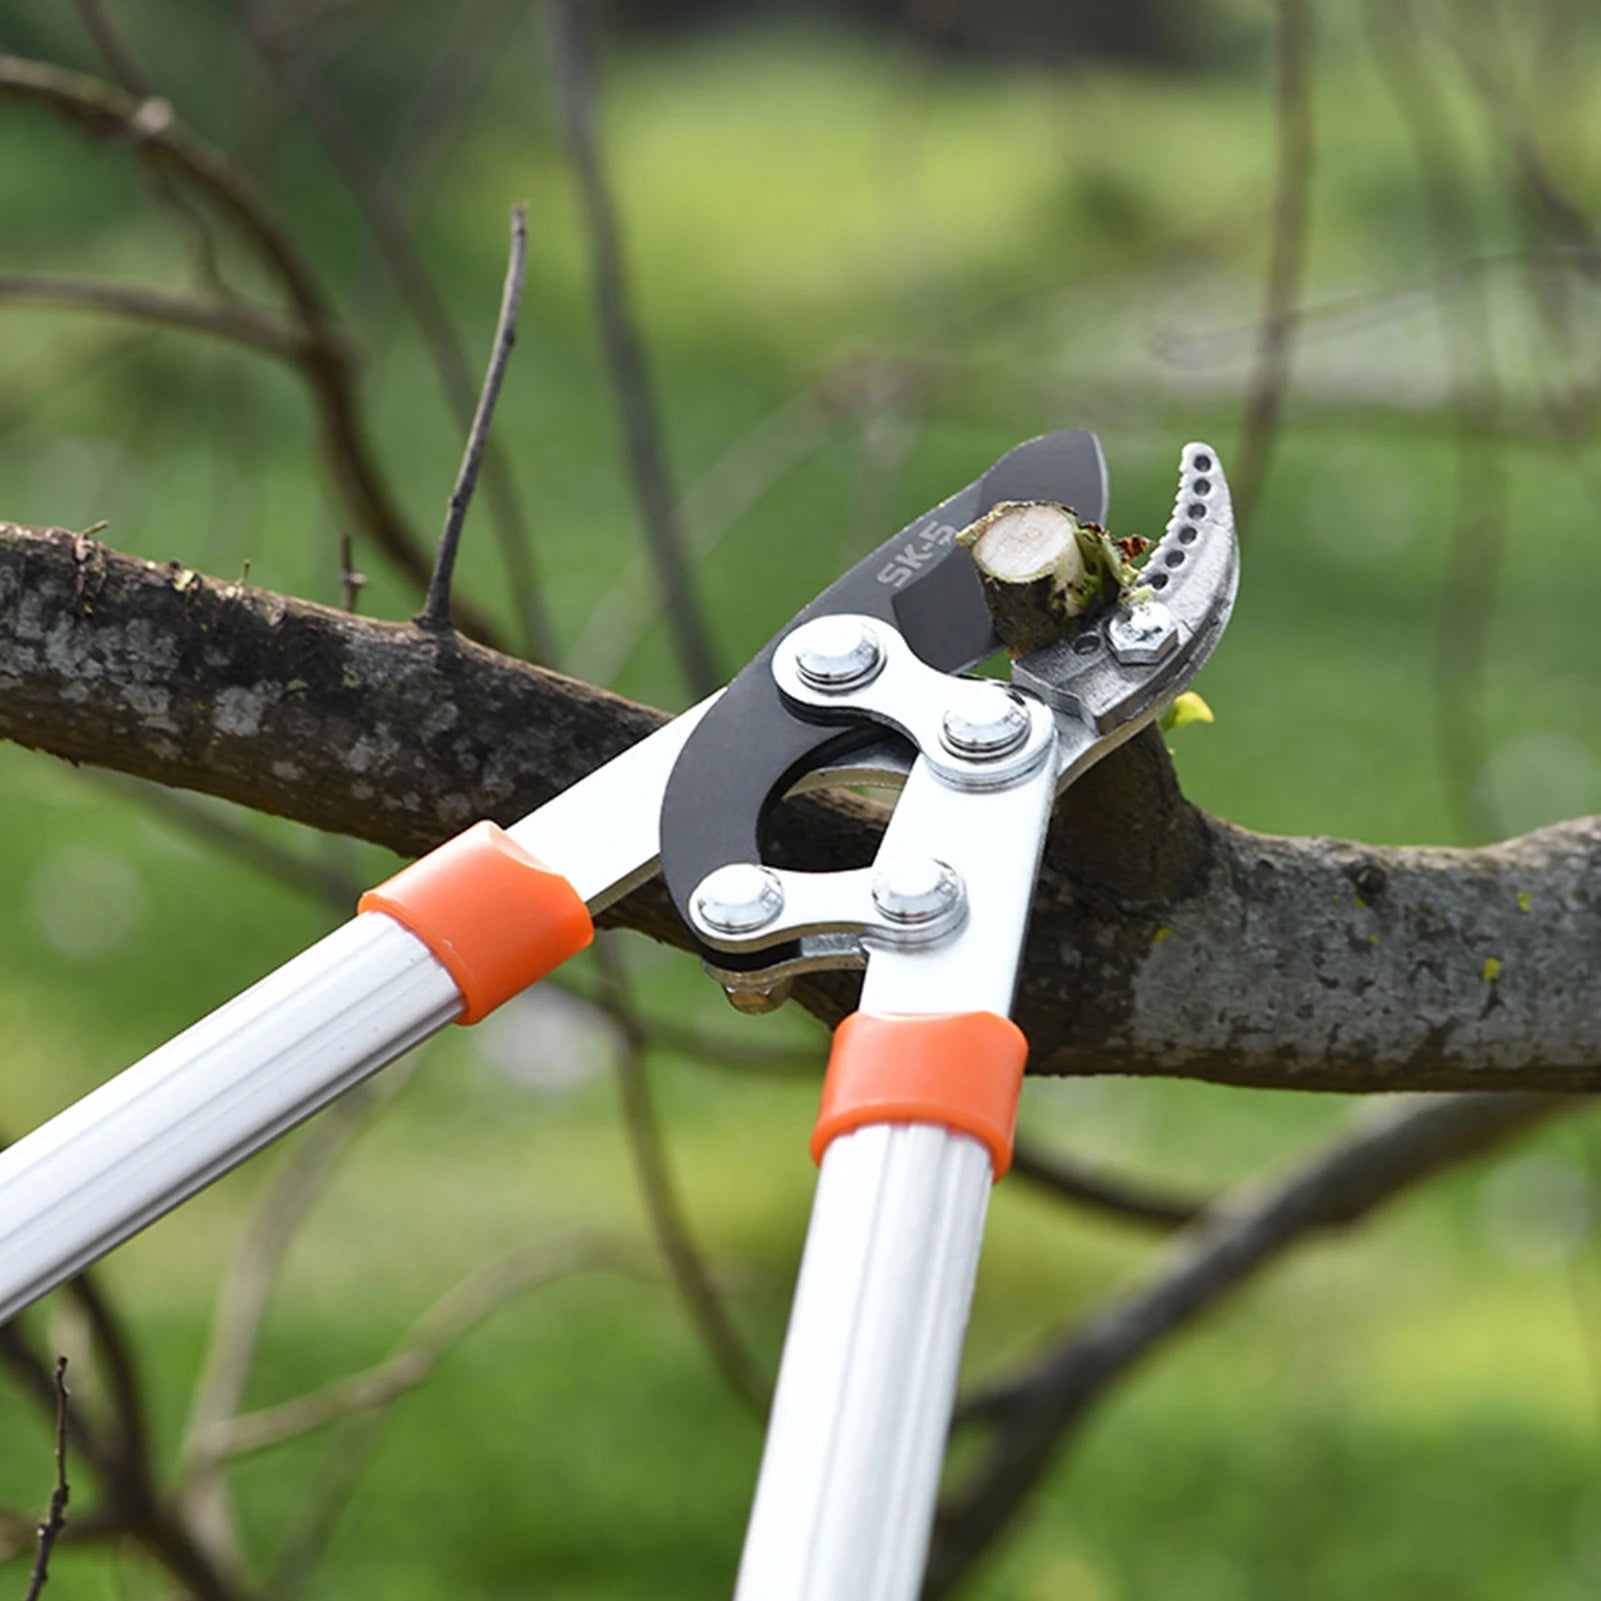 Long Length Scissor Hedge Anvil Shear Anti-Slip Grip Garden Pruning Hand Tool Ratchet Cut Tree Branch Garden Tools